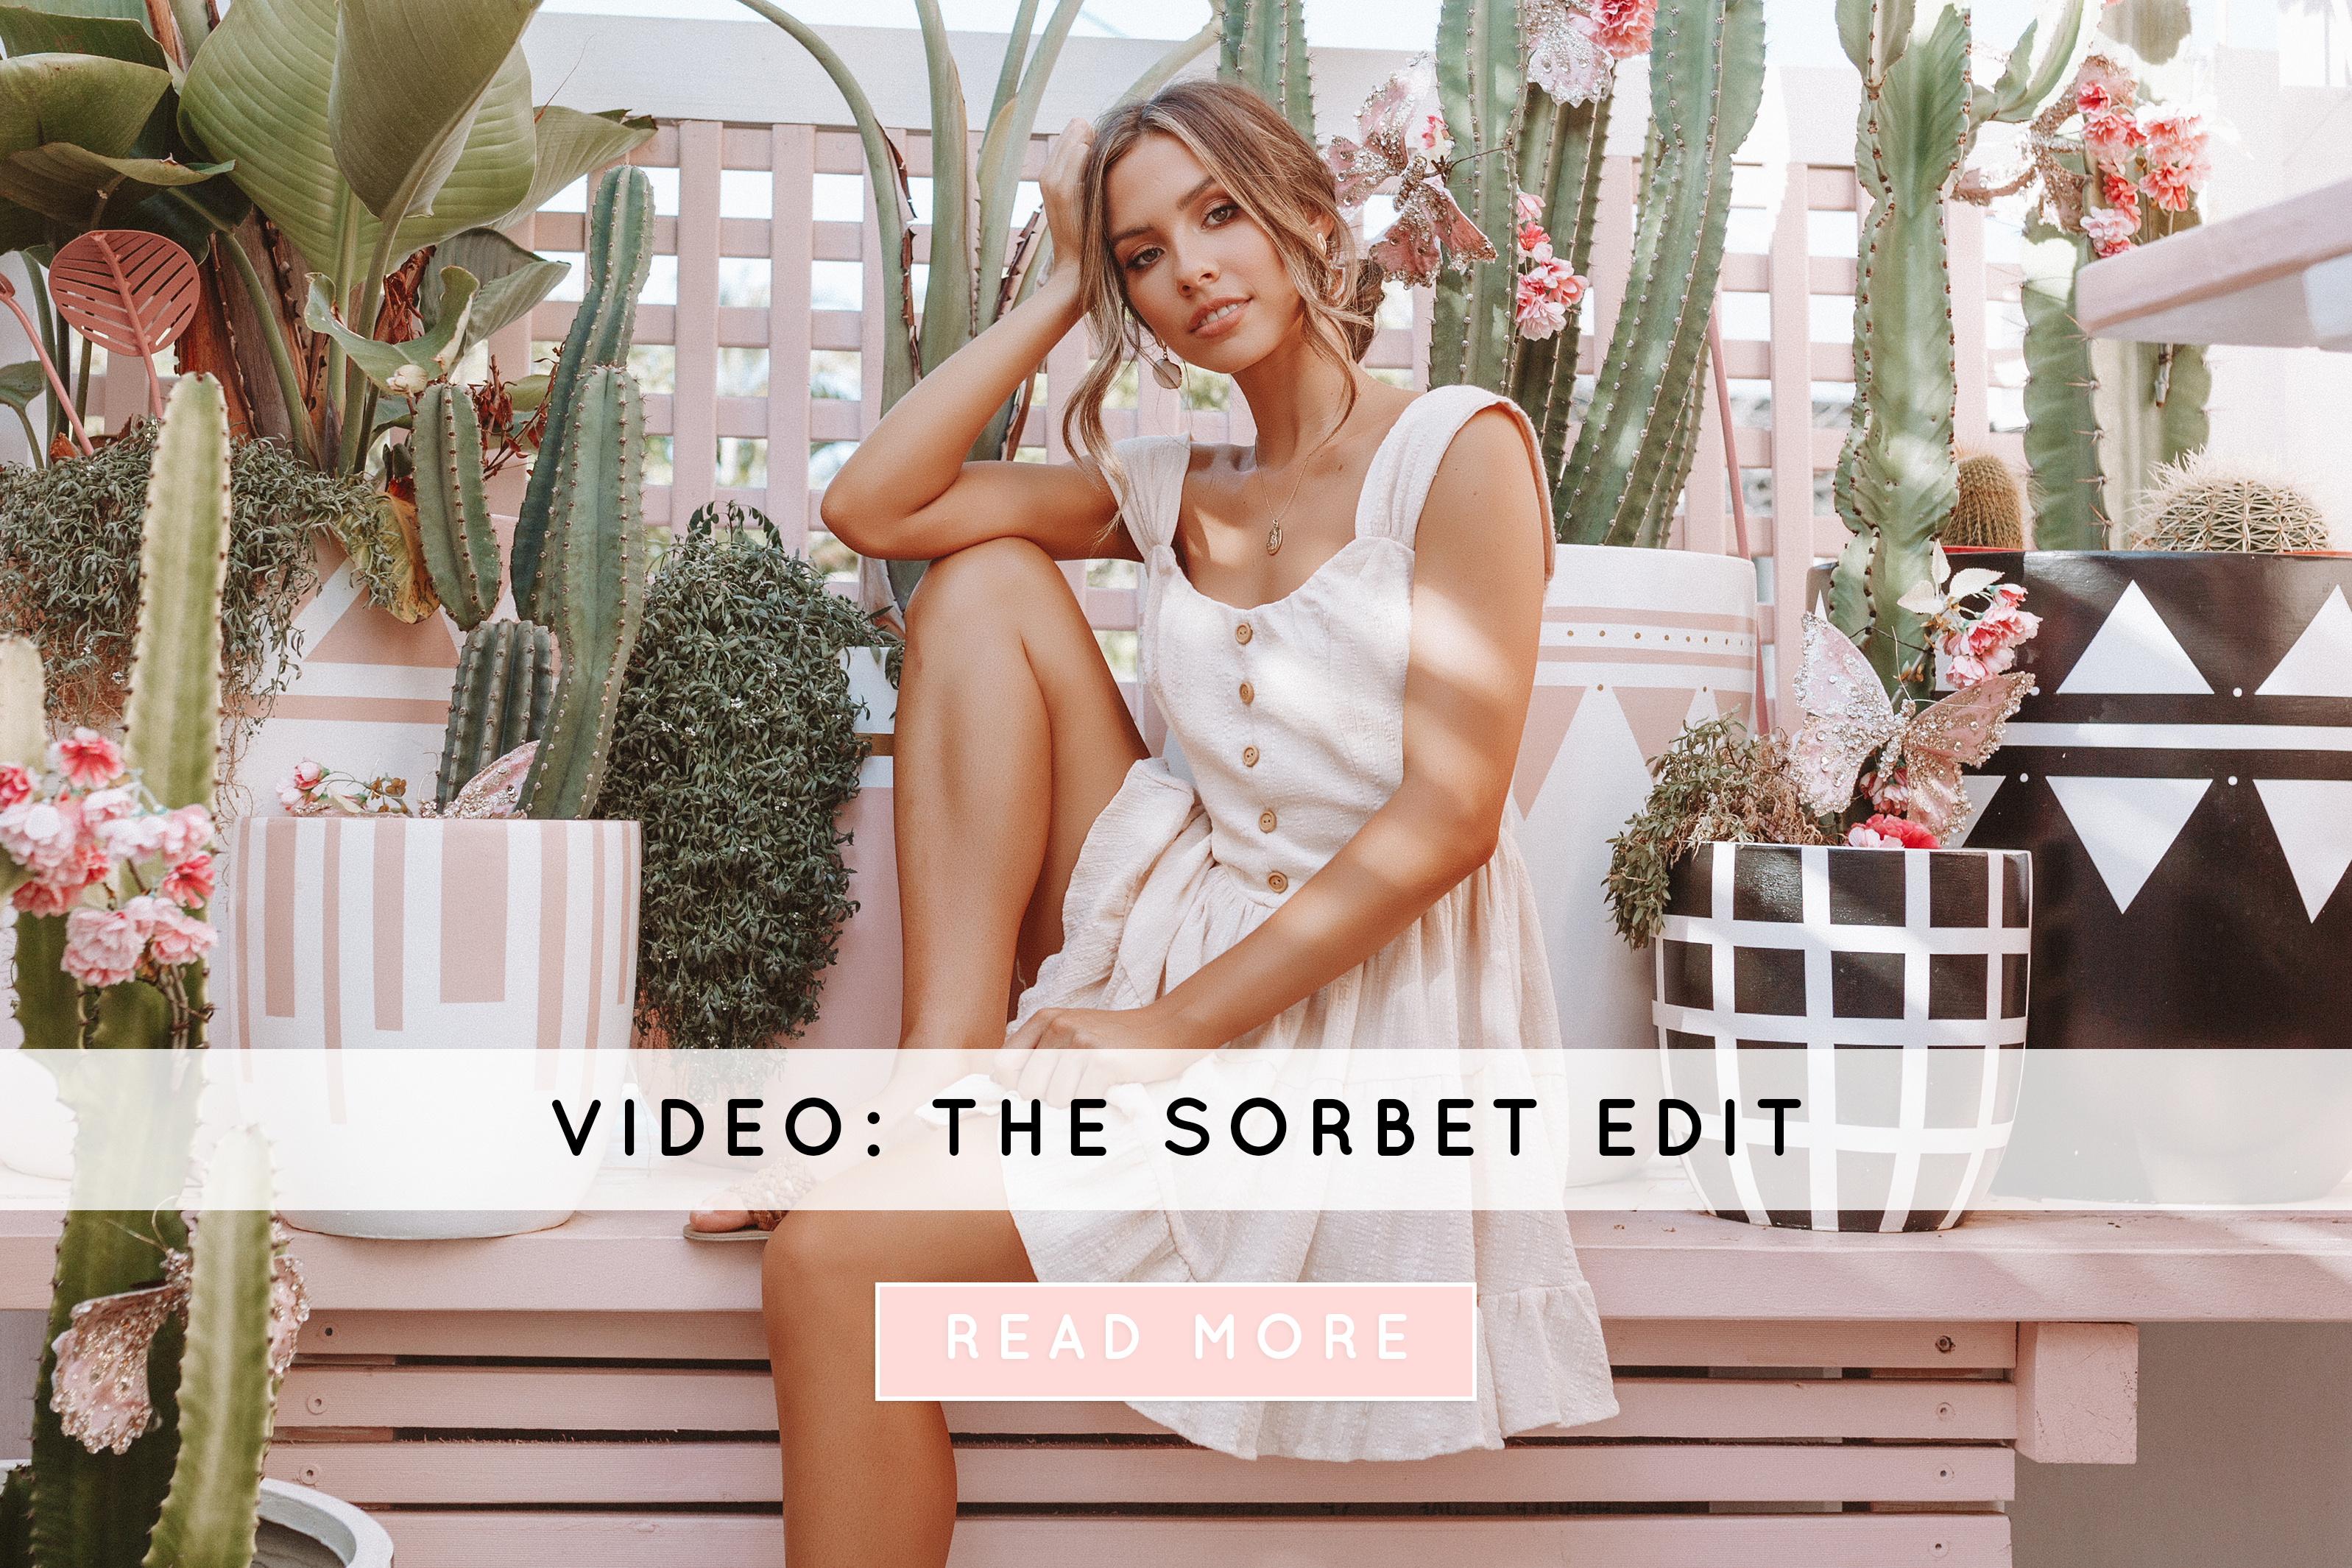 Video: The Sorbet Edit